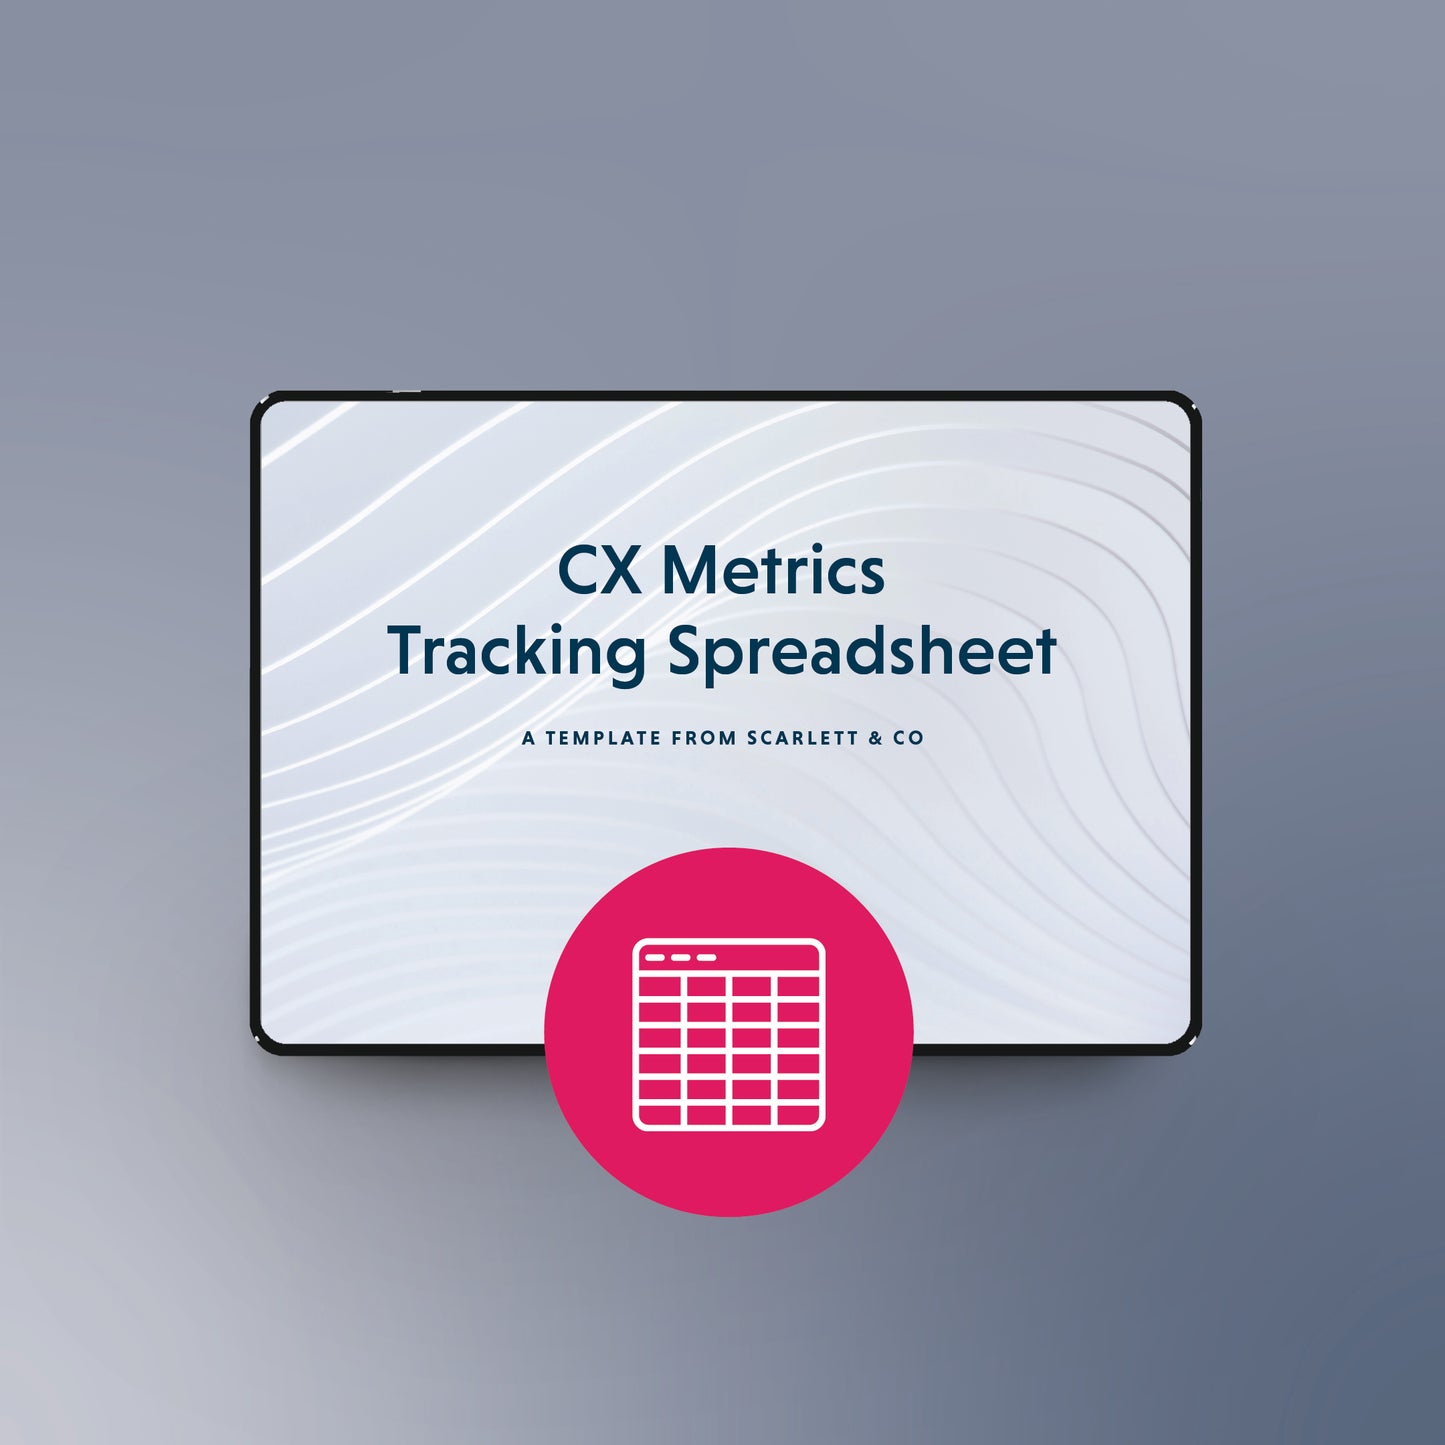 CX Metrics Tracking Spreadsheet